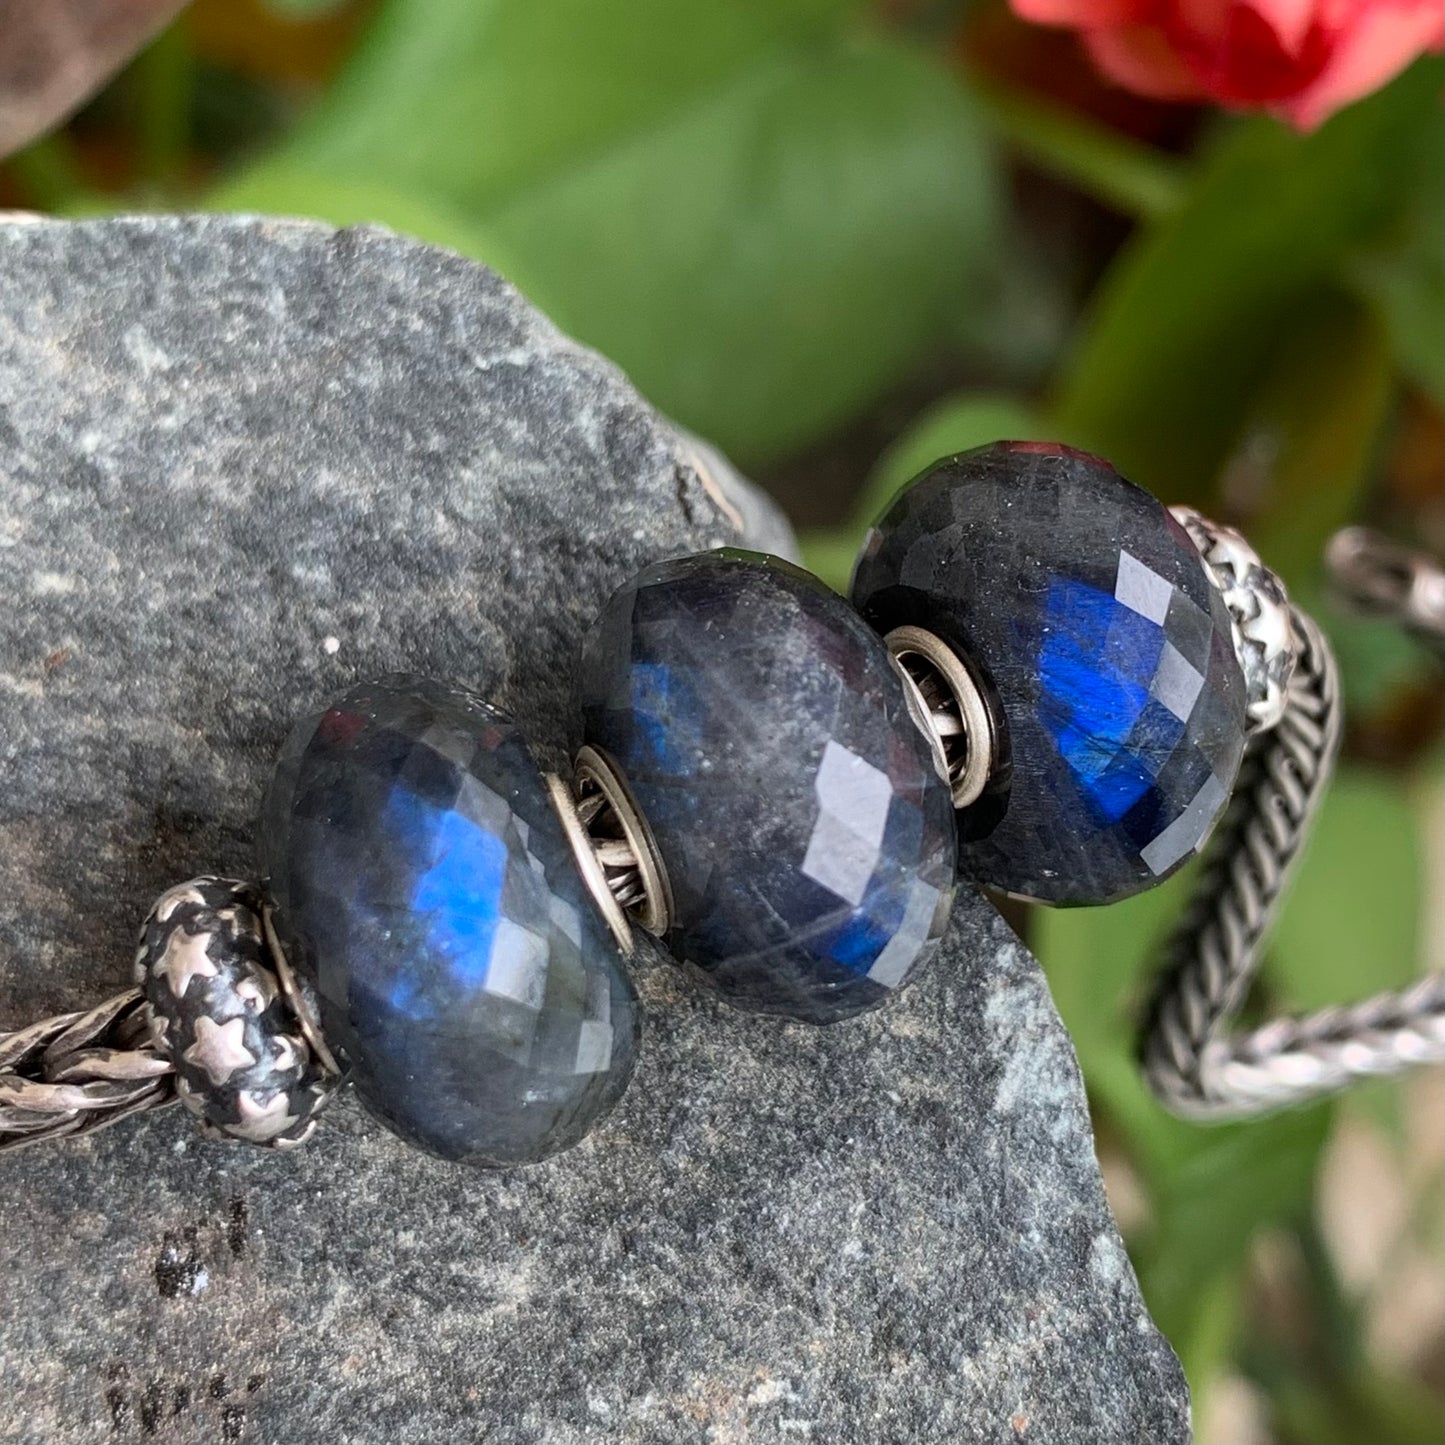 Gergous Faceted Dark Black Labradorite Beads With Blue Flash Gemstone Beads Fit for Charm European Bracelets